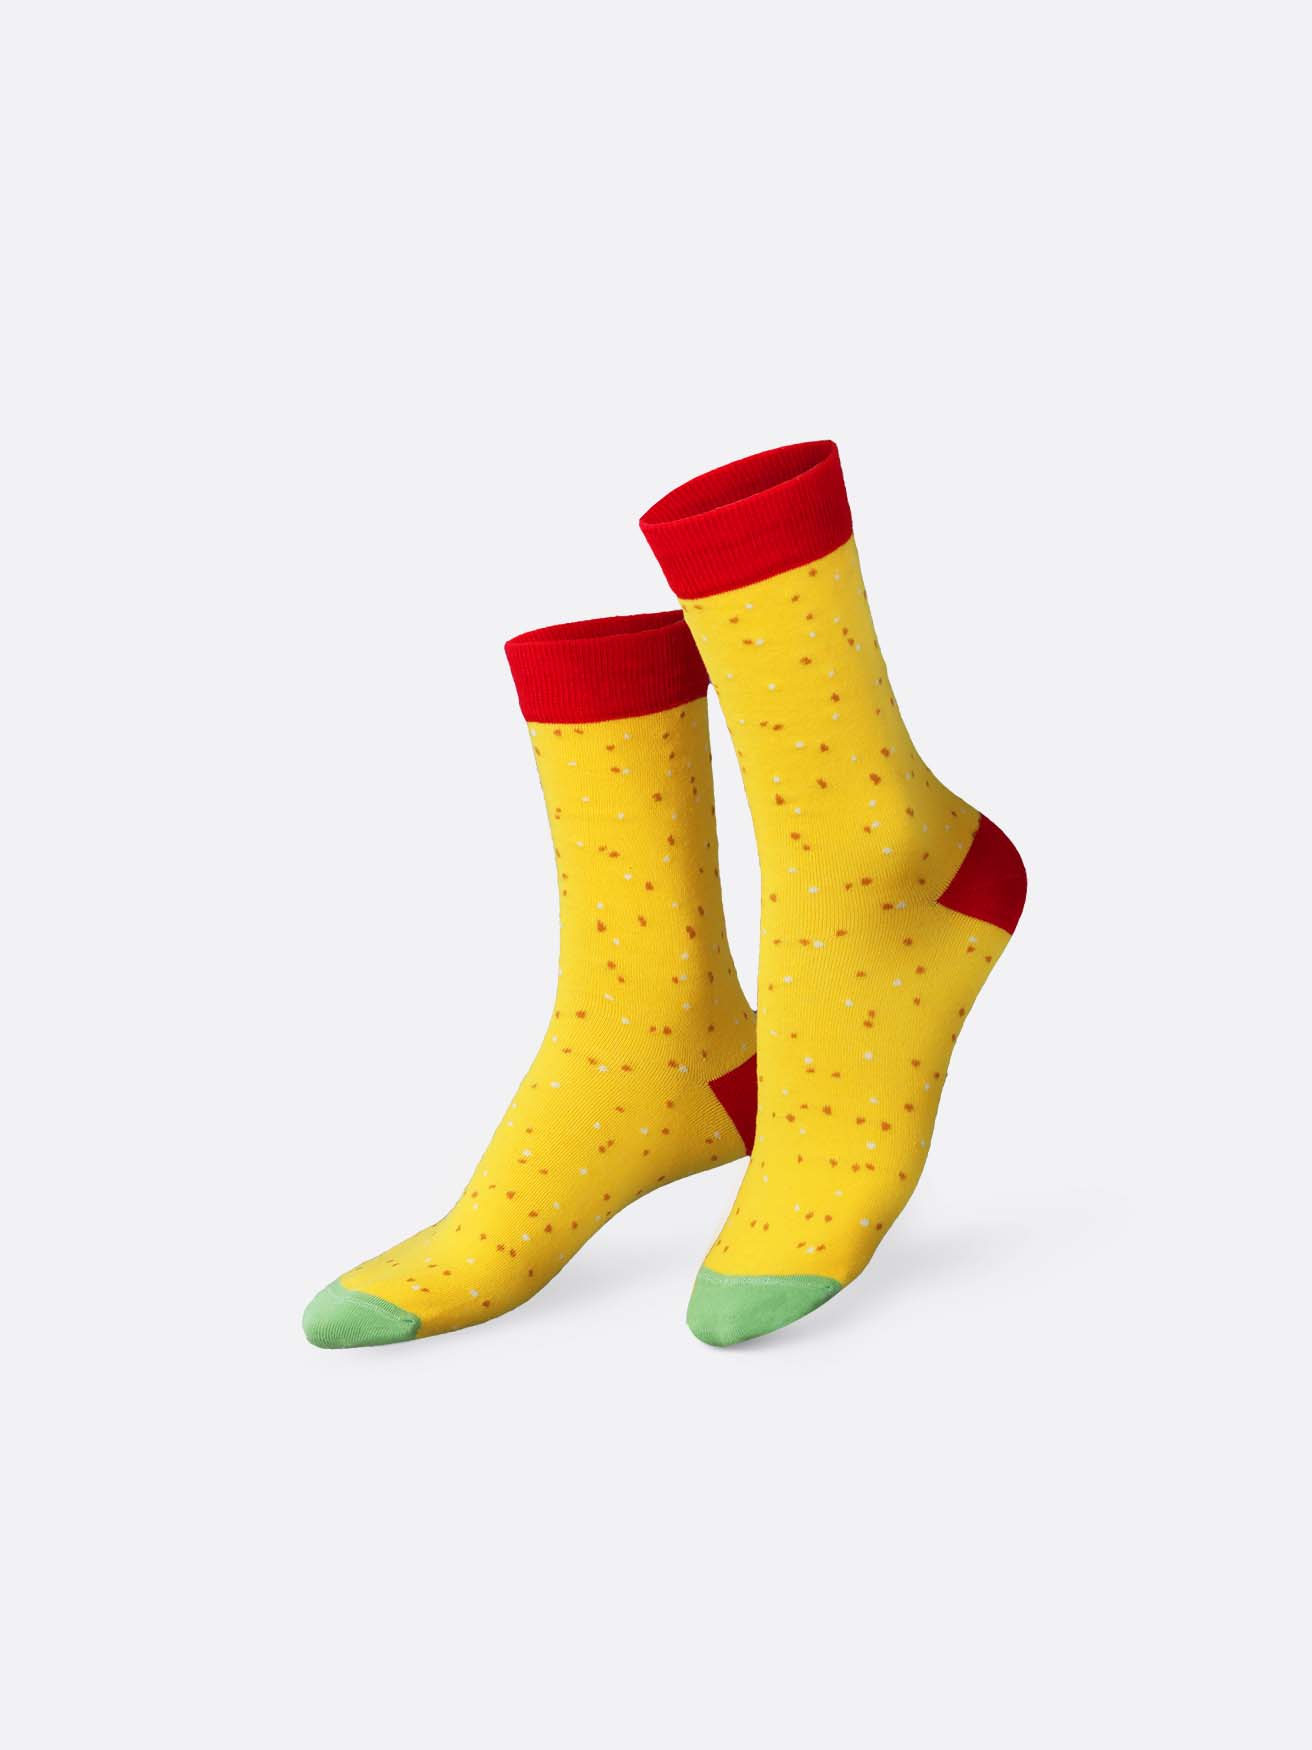 Eat My Socks: Tasty Nachos (2 pairs)